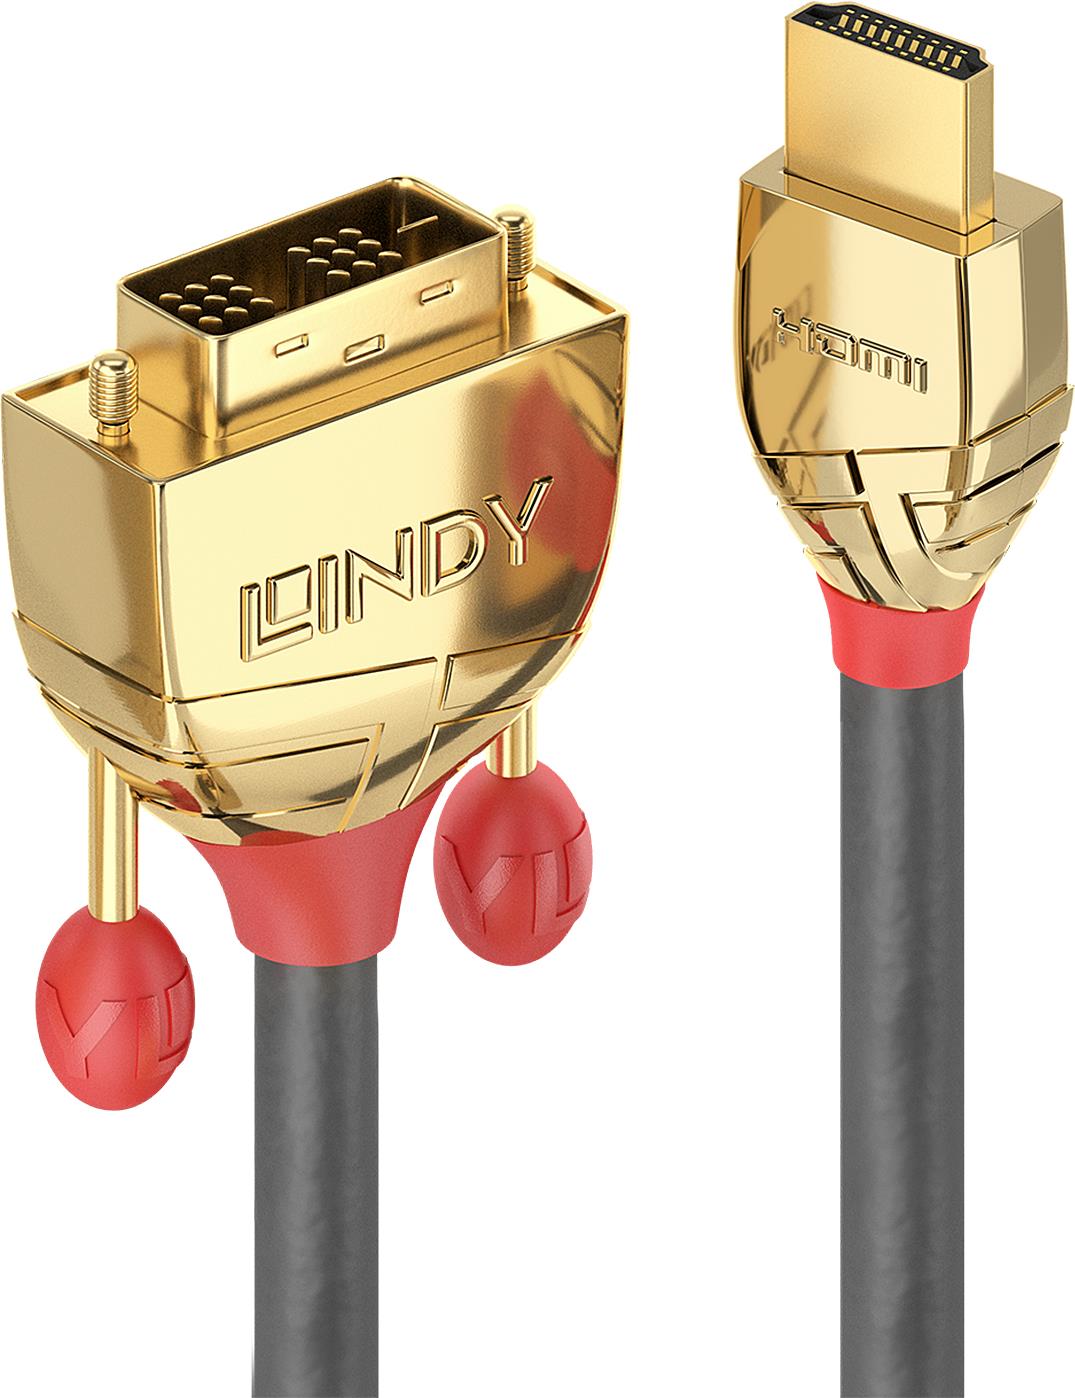 LINDY HDMI / DVI Anschlusskabel [1x HDMI-Stecker - 1x DVI-Stecker 18+1pol.] 15 m Gold